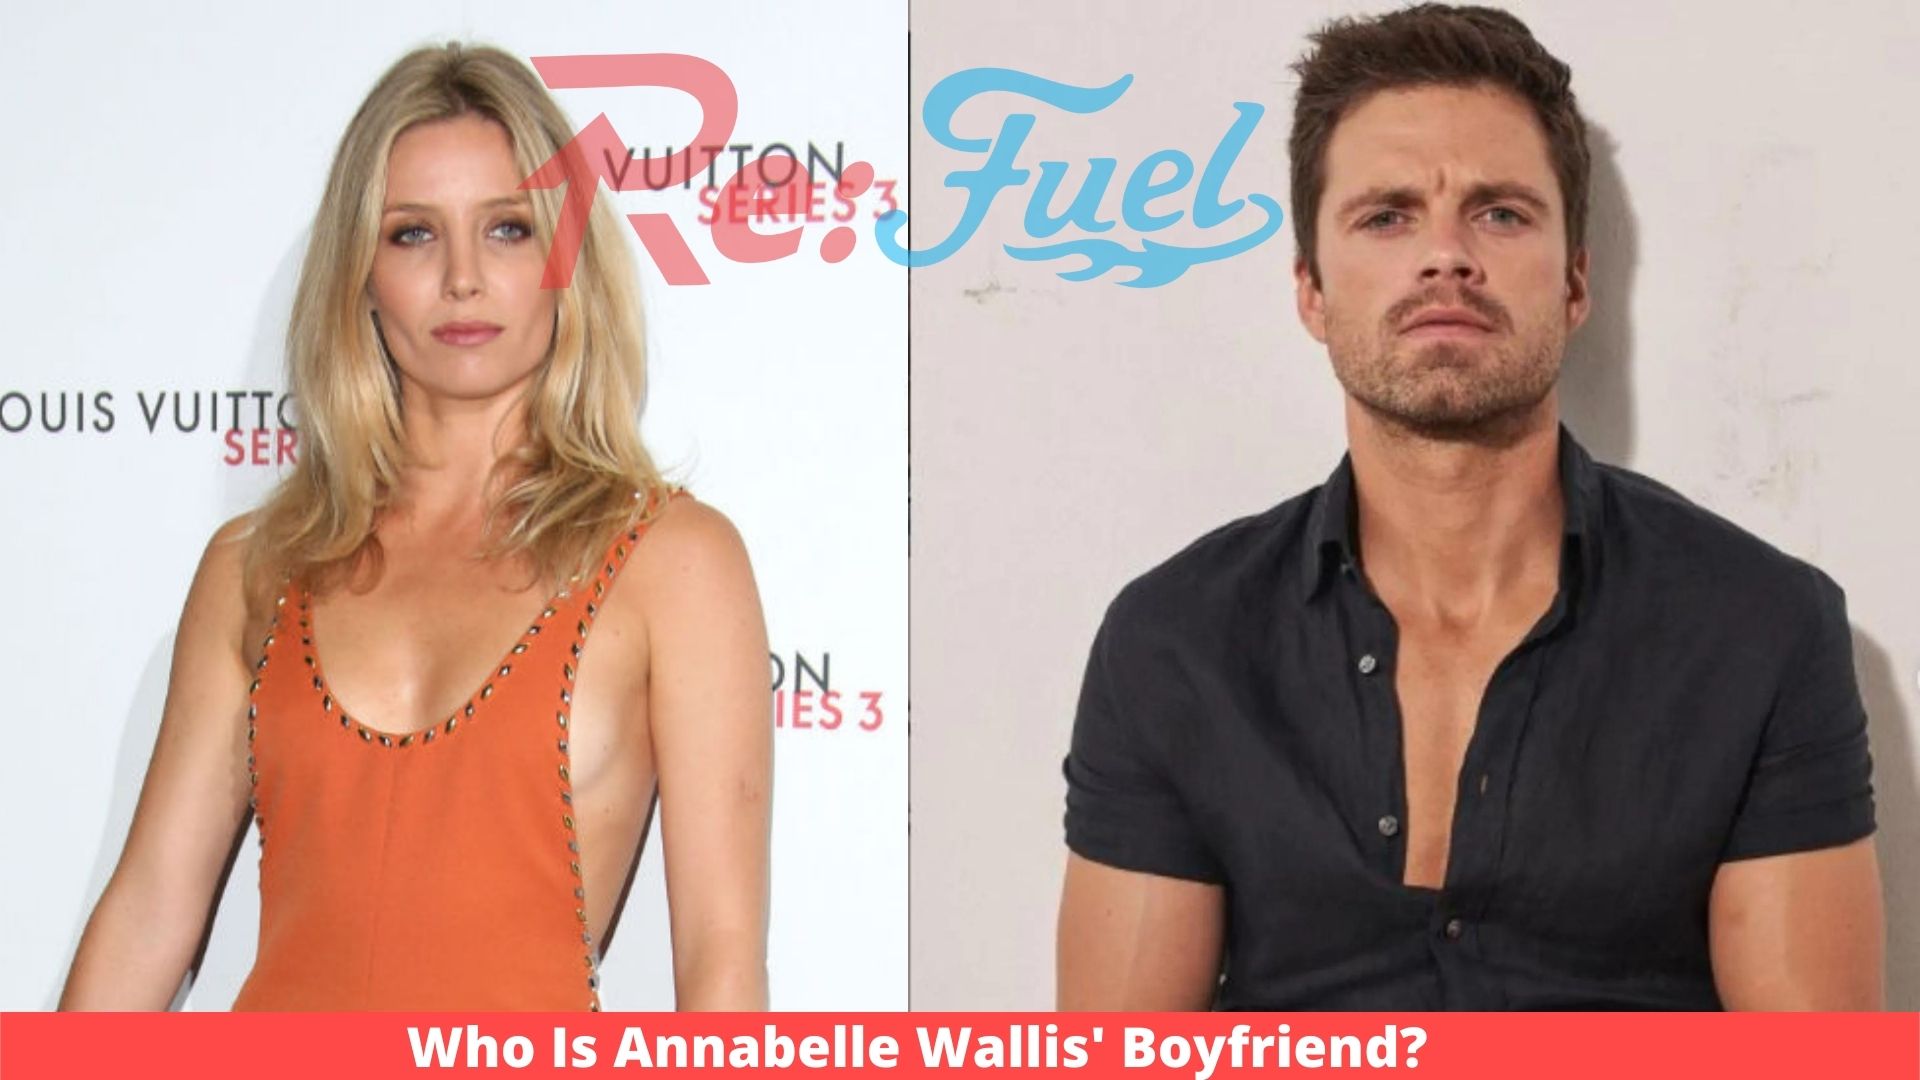 Who Is Annabelle Wallis' Boyfriend